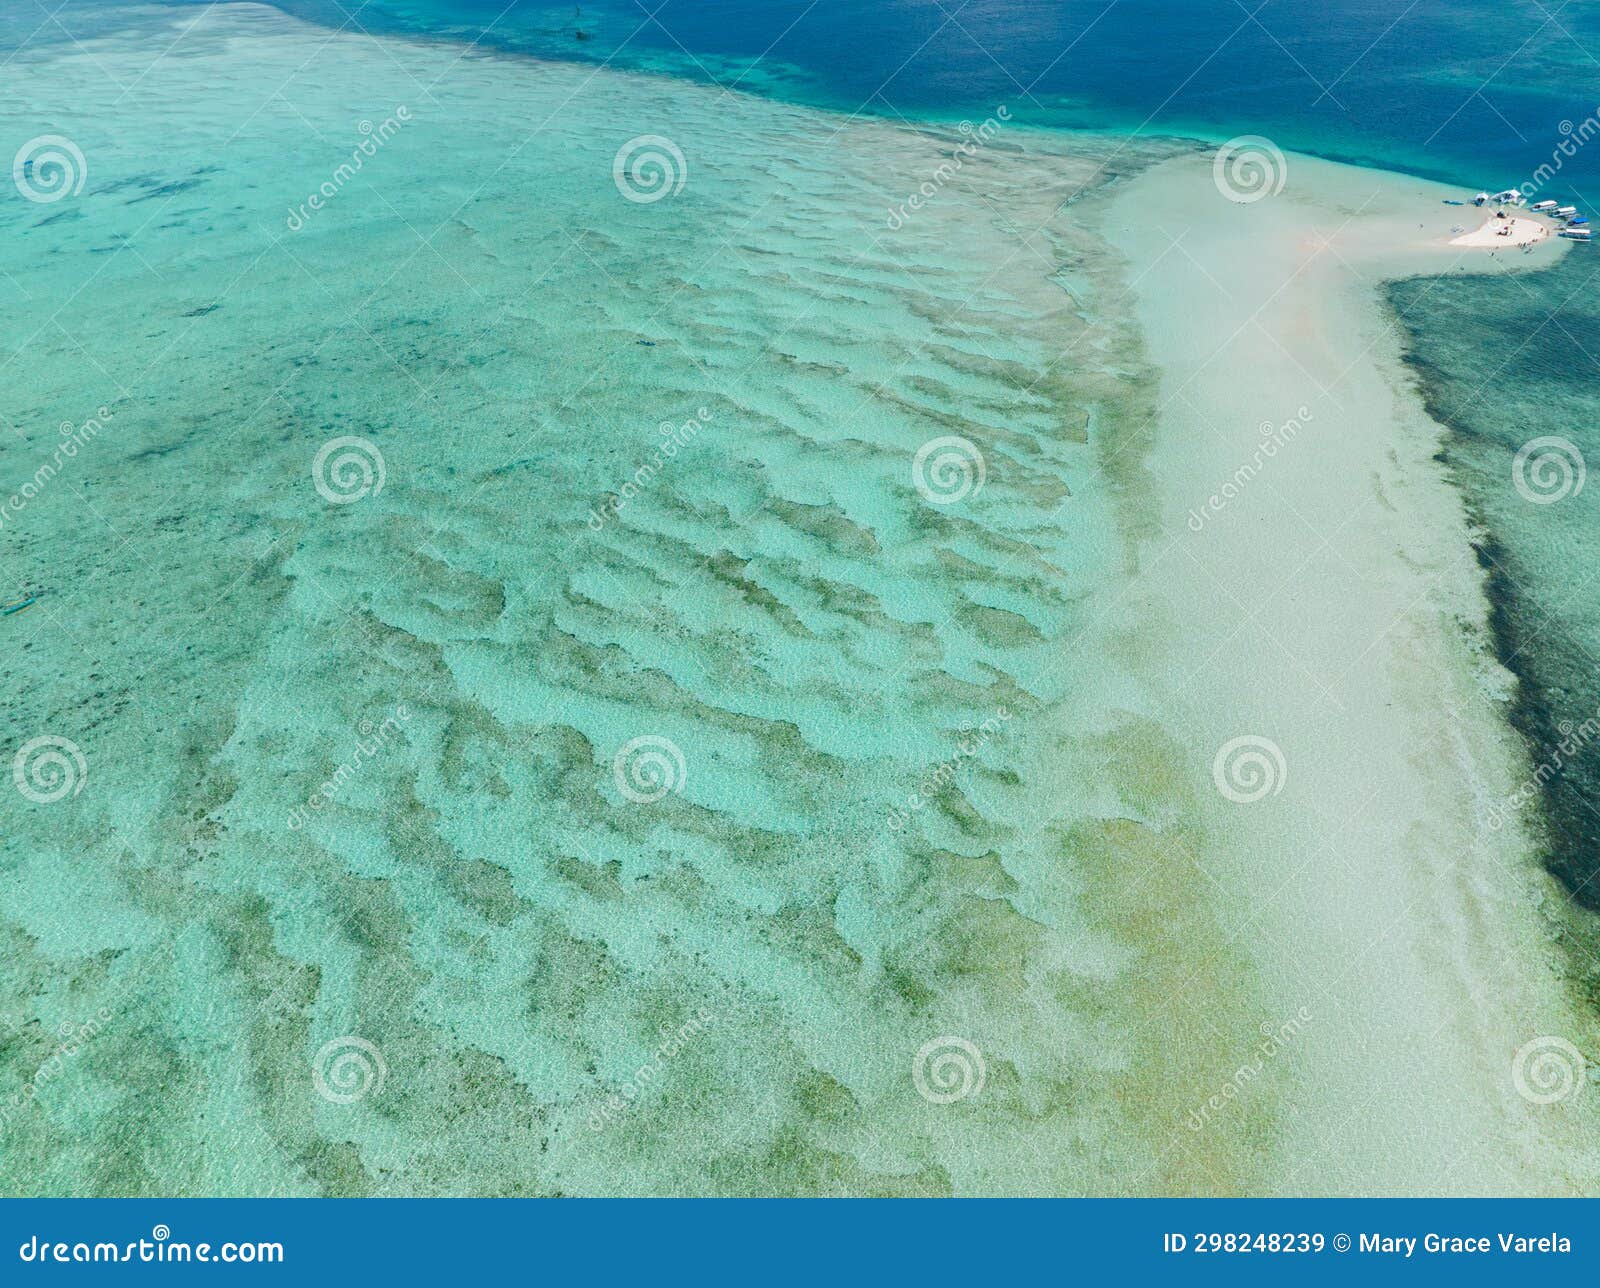 sandy ocean floor and sandbar in the philippines.